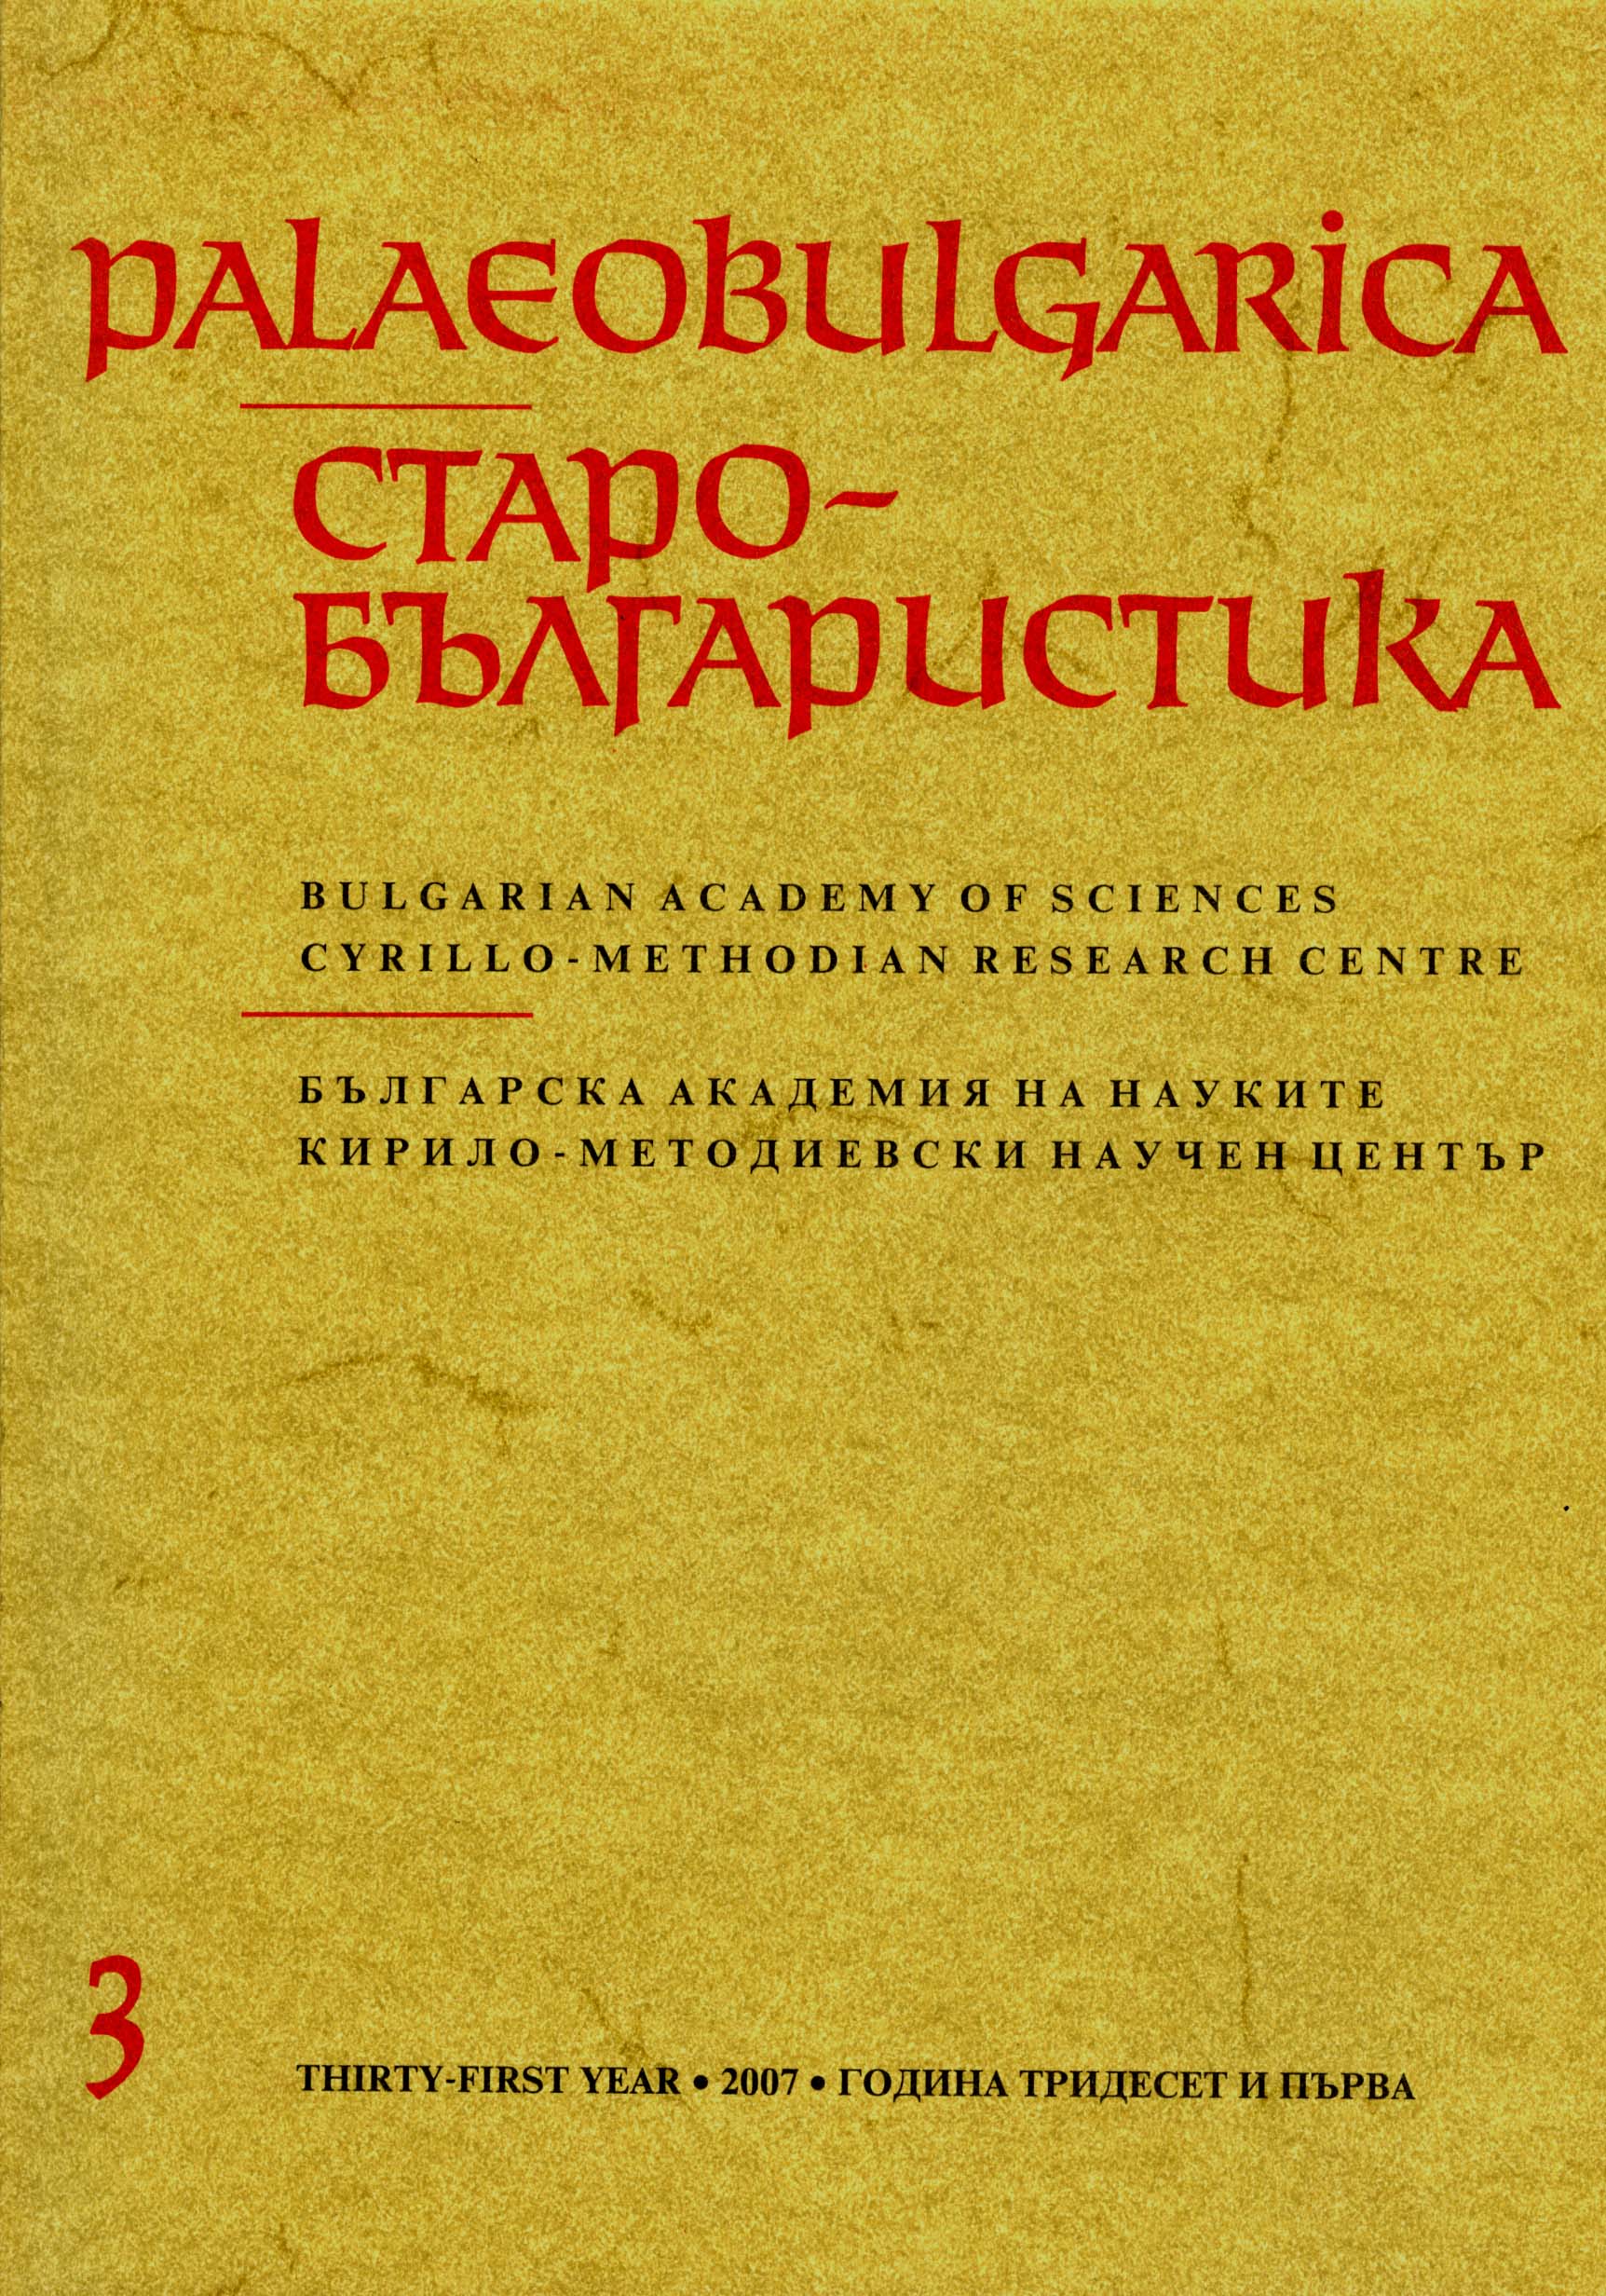 The Varazhdin Apostol Cover Image